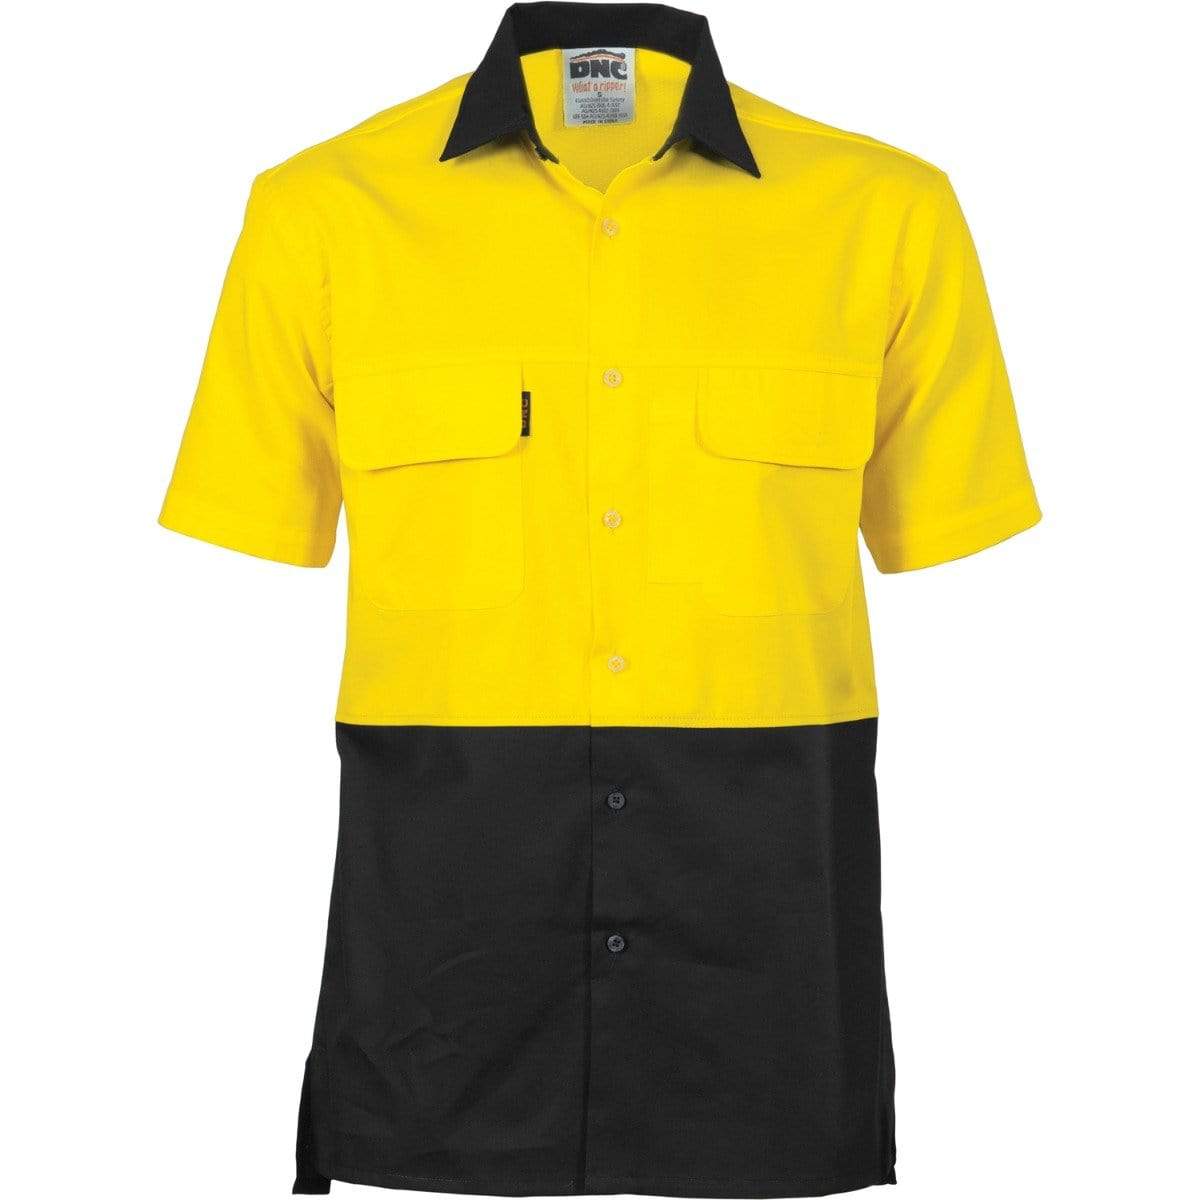 Dnc Workwear Hi-vis 3 Way Cool-breeze Short Sleeve Cotton Shirt - 3937 Work Wear DNC Workwear Yellow/Black 5XL 